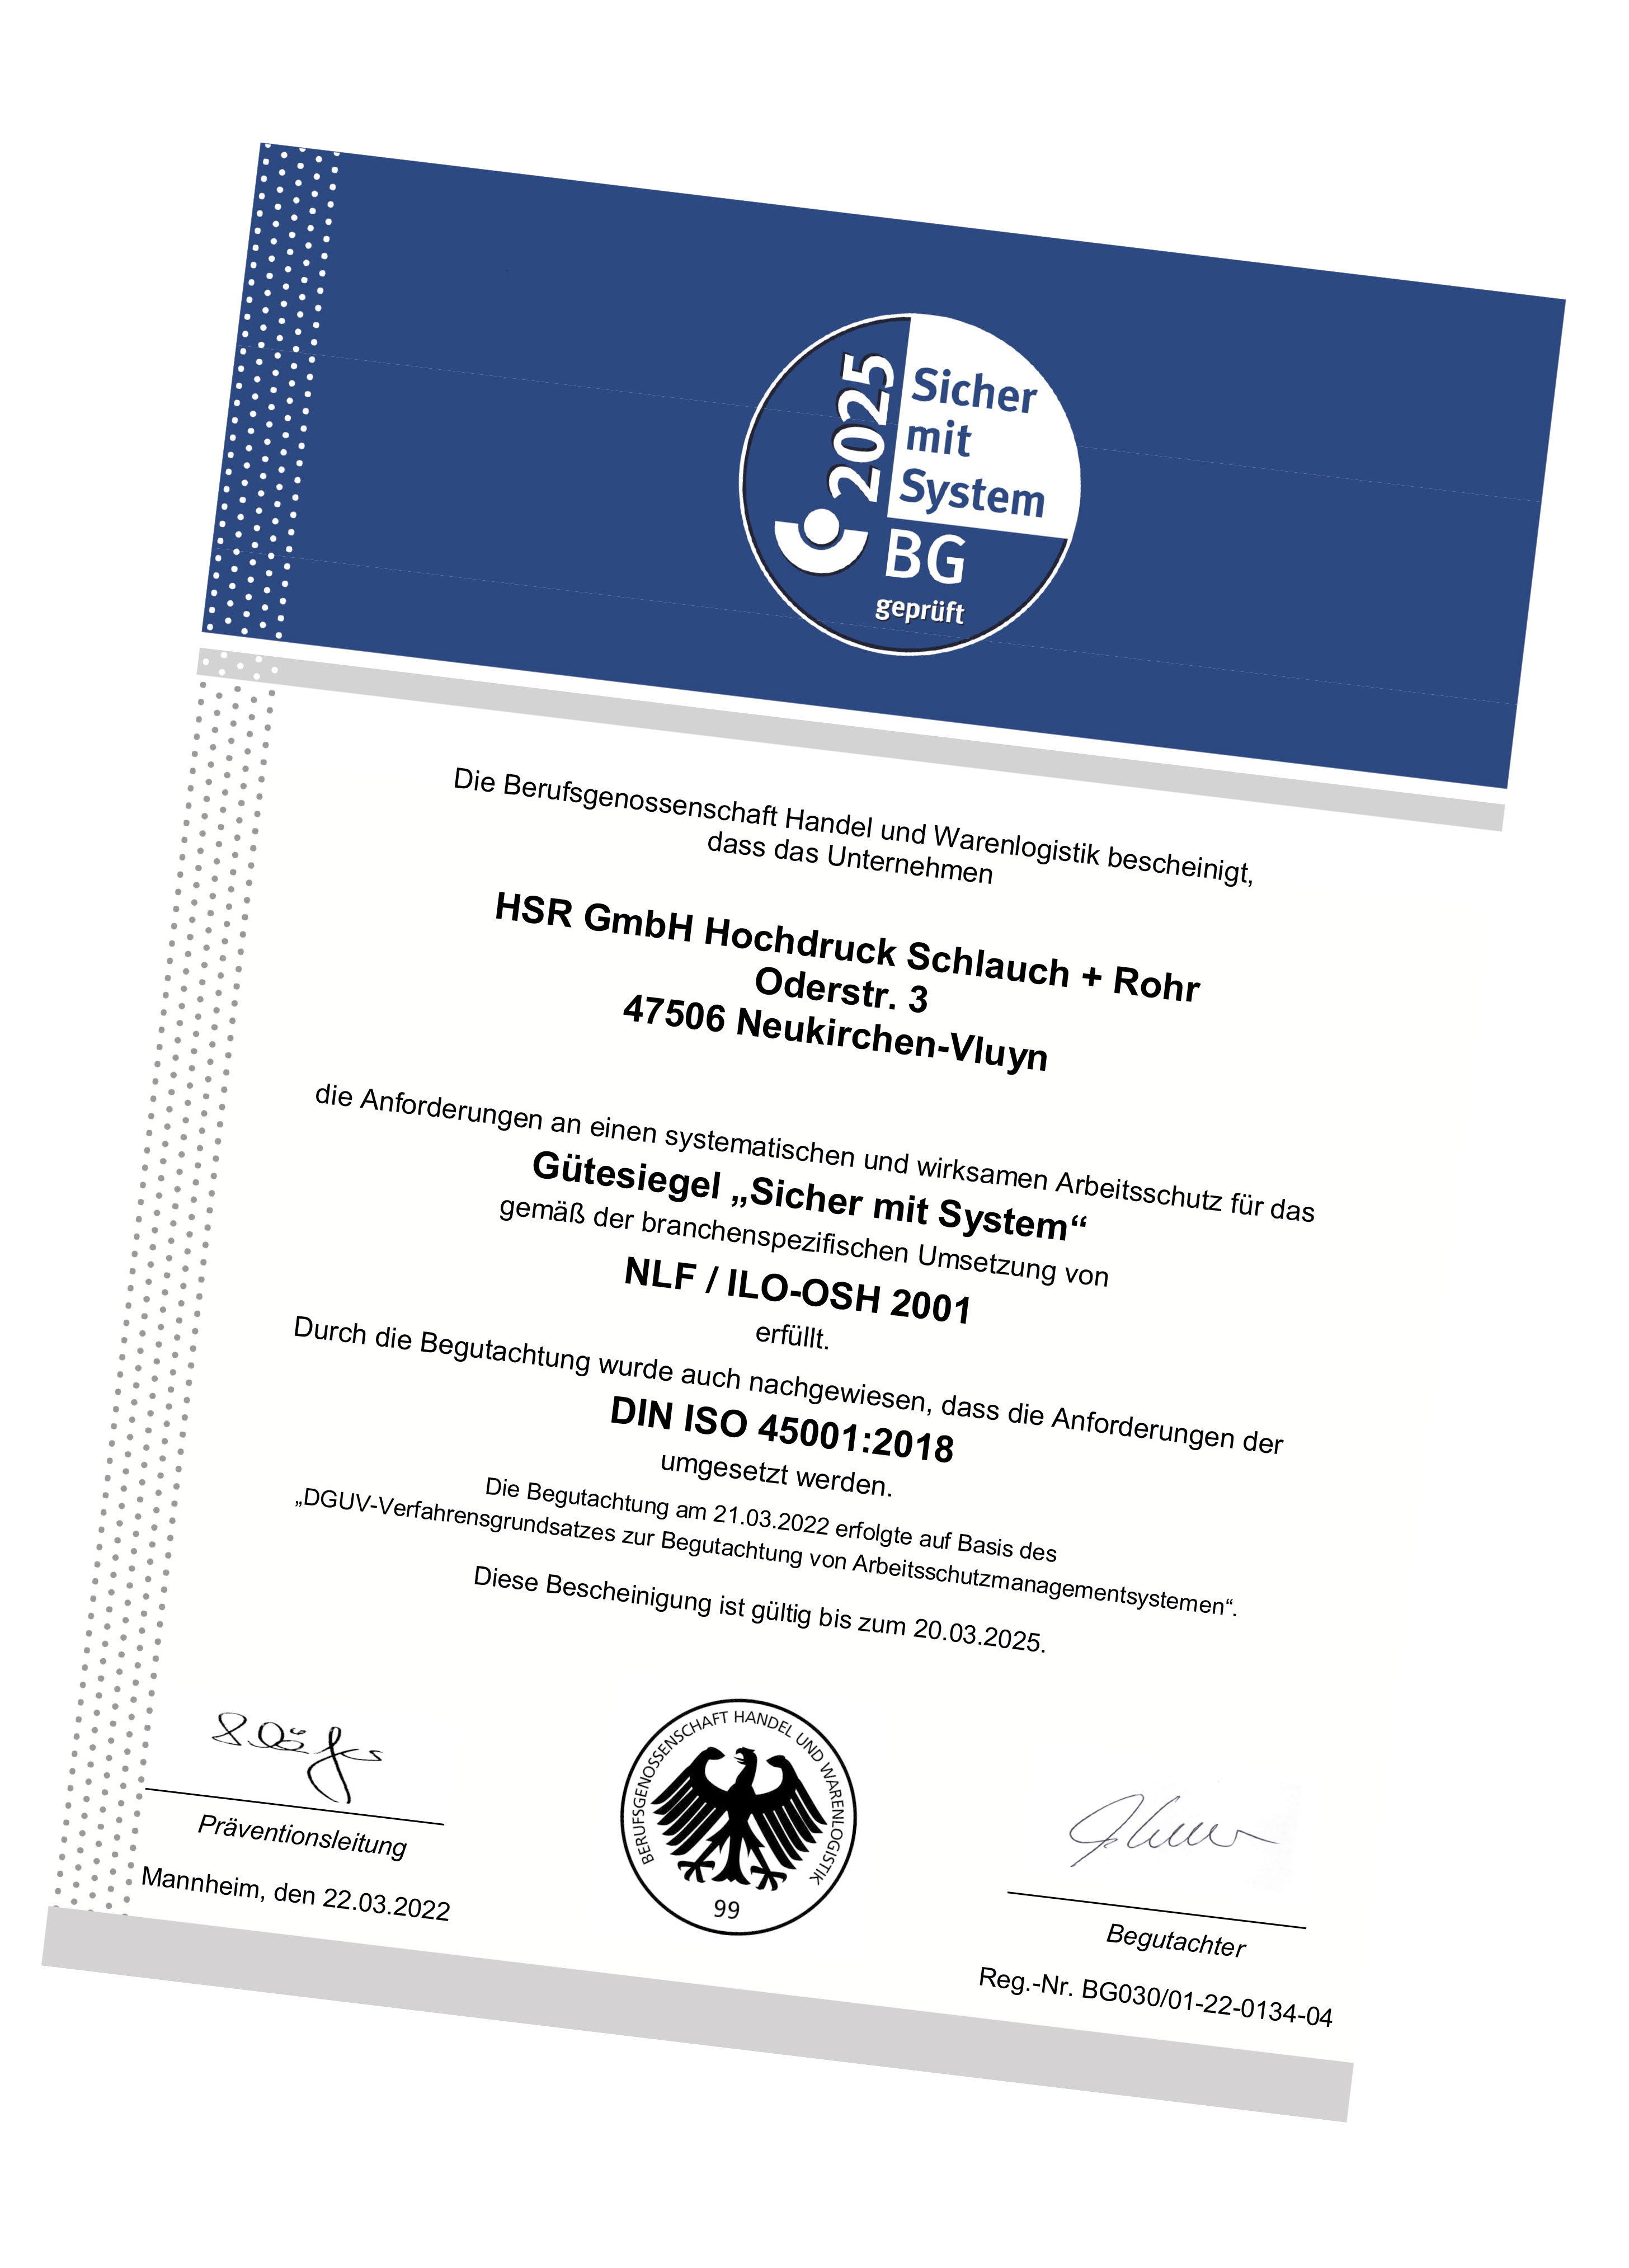 [Translate to Englisch:] HSR Zertifikat Arbeitssicherheit DIN ISO 45001:2018